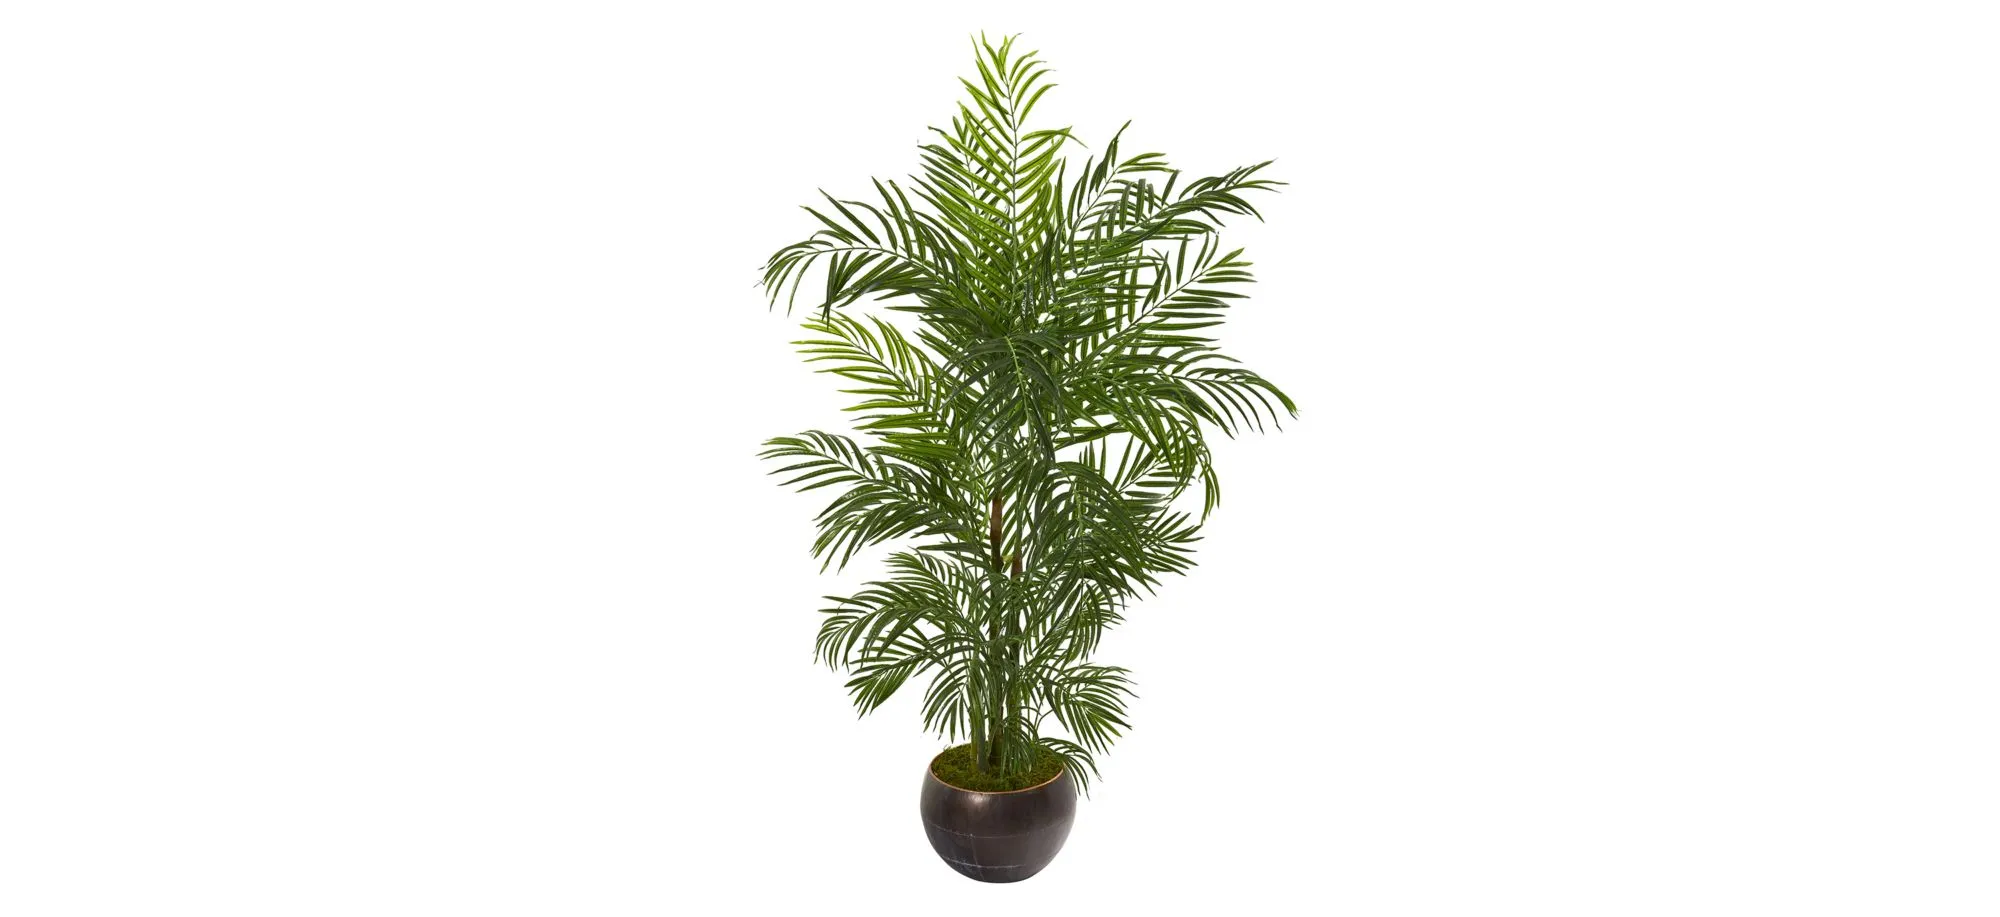 66in. Areca Palm Artificial Tree in Planter (Indoor/Outdoor) in Green by Bellanest